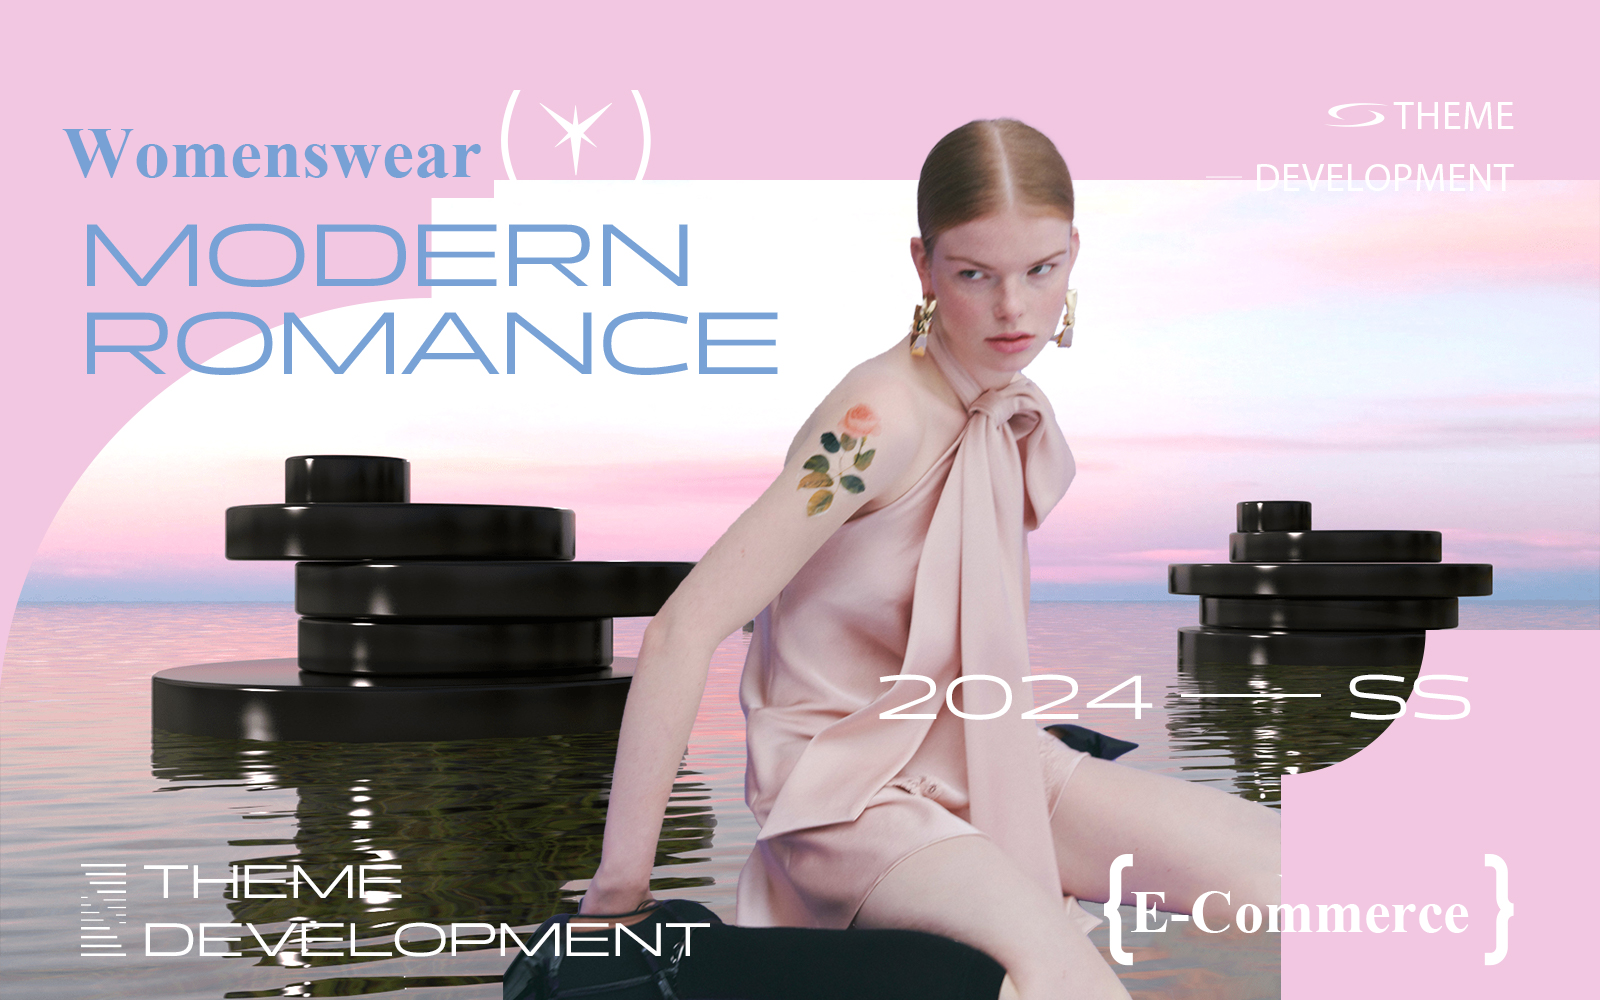 Modern Romance -- The Design Development of Womenswear E-Commerce